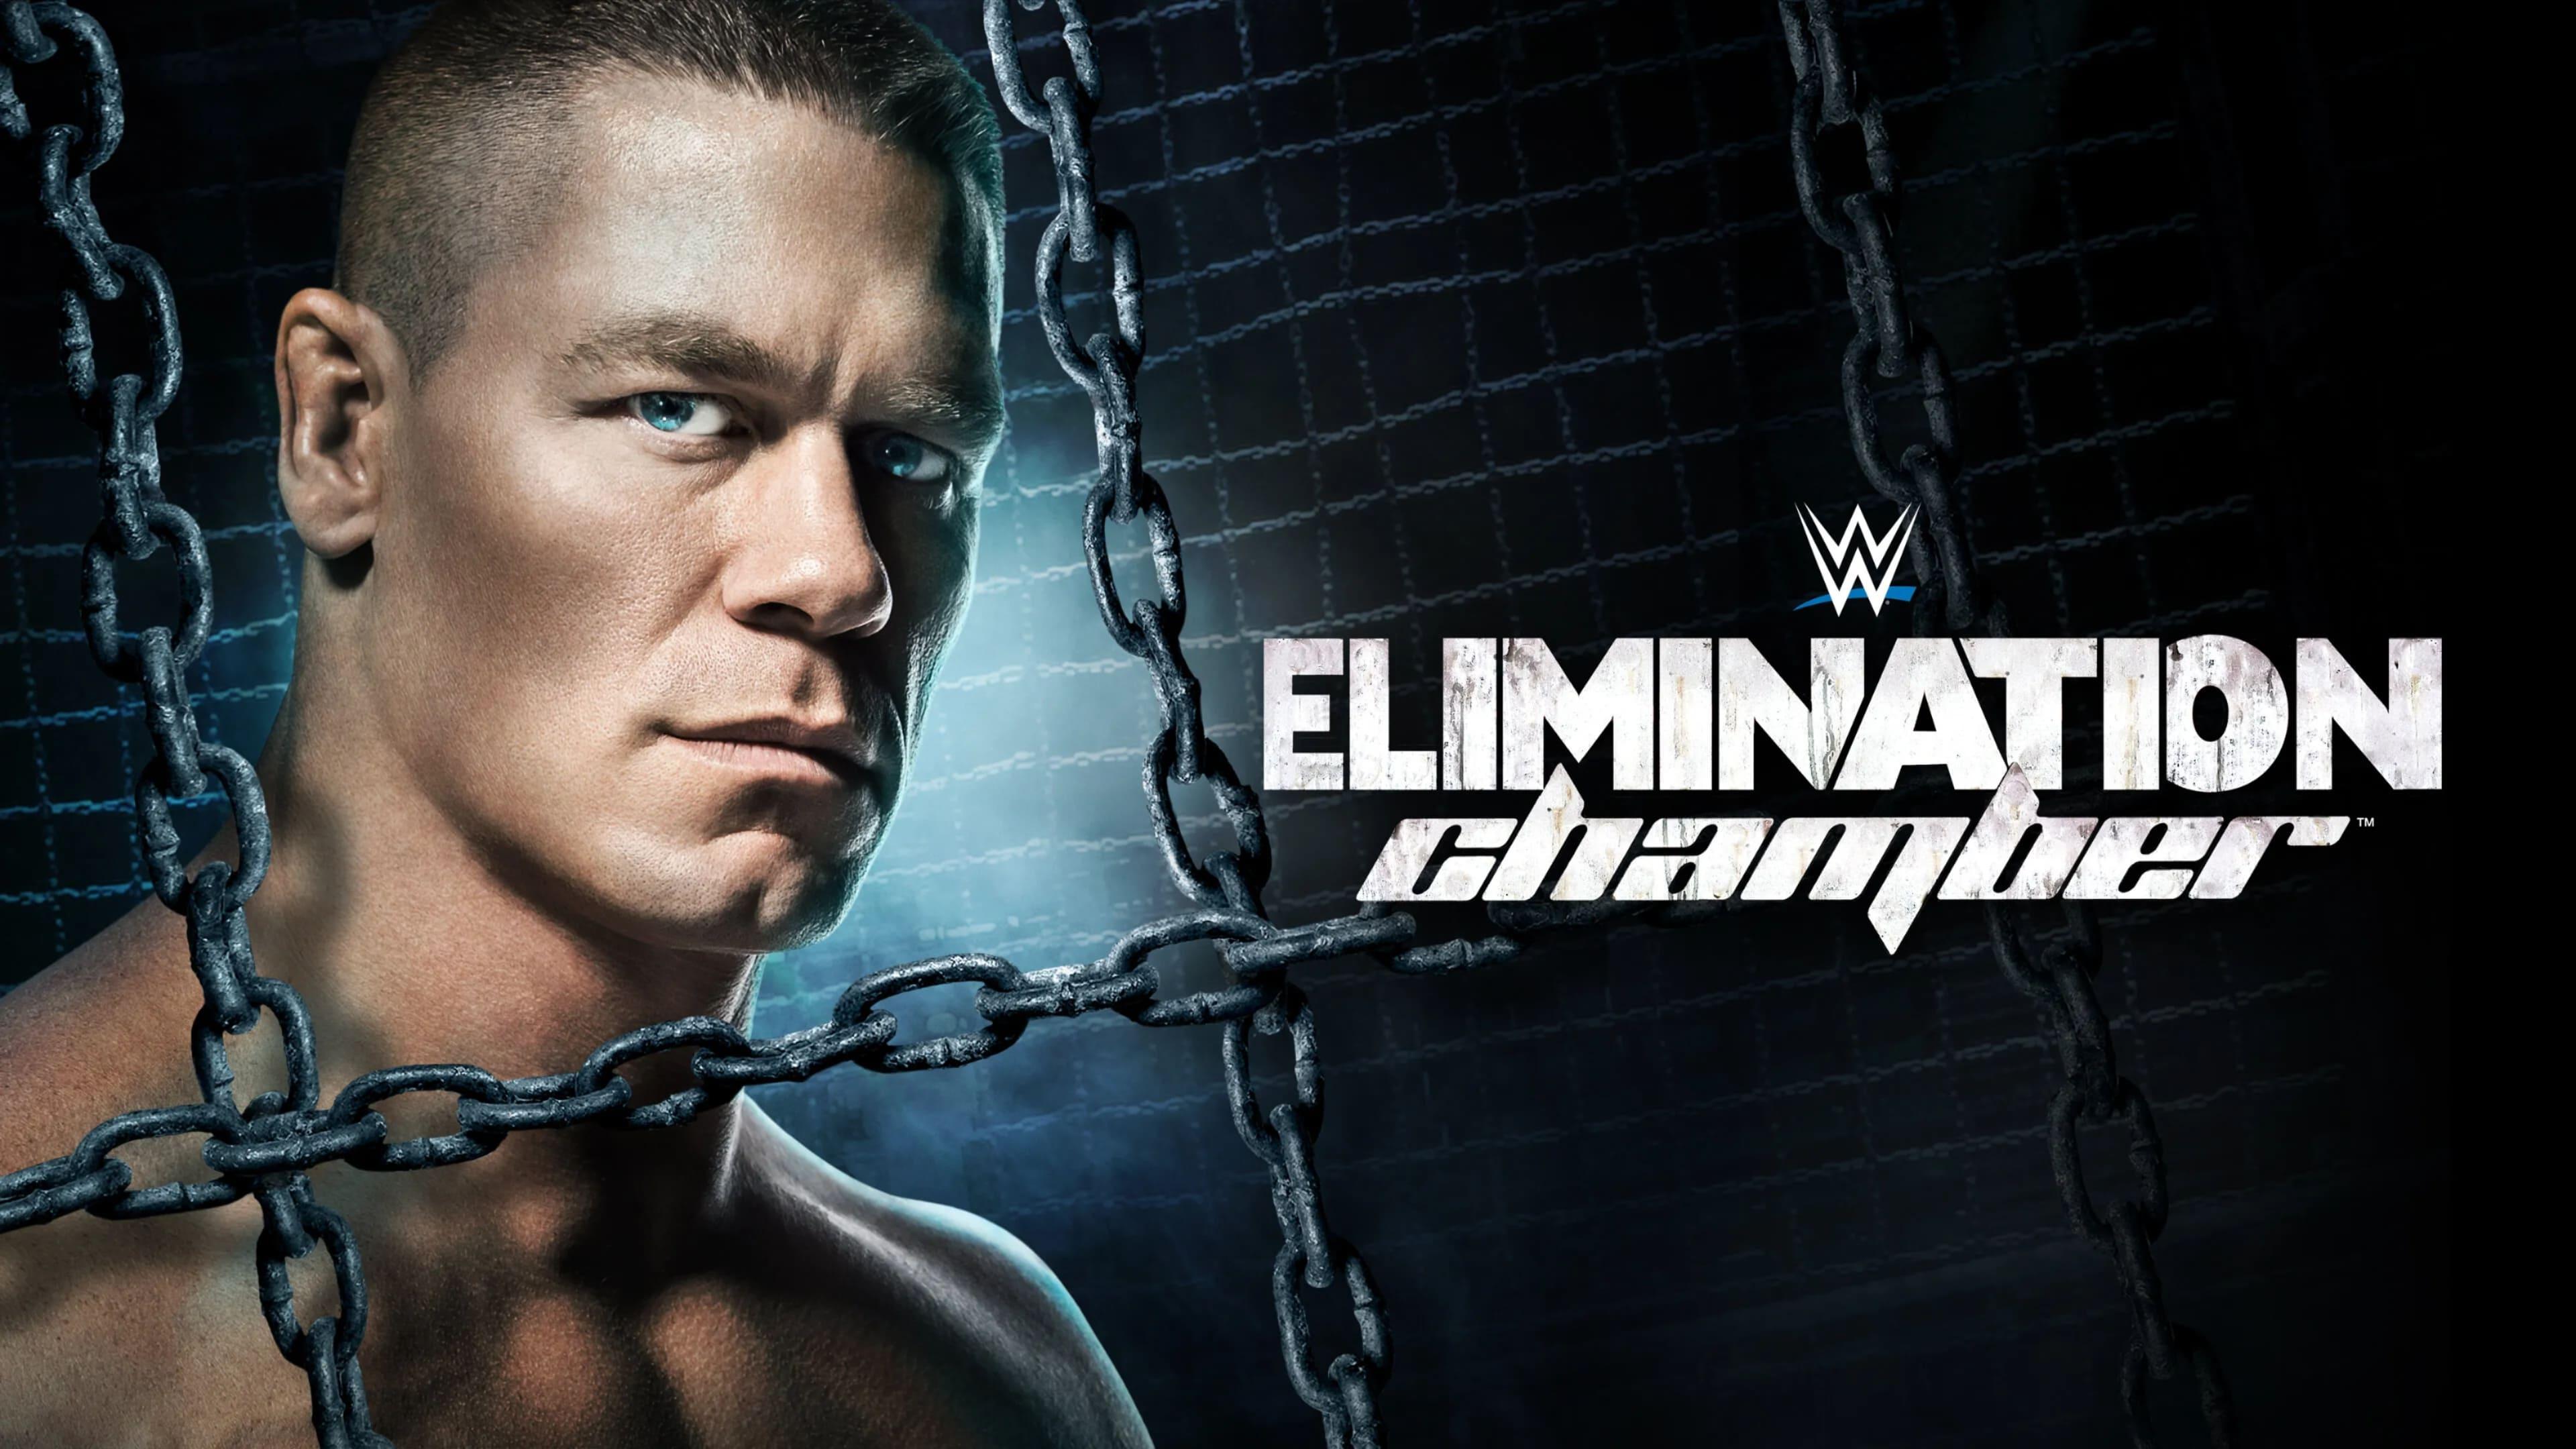 WWE Elimination Chamber 2017 backdrop